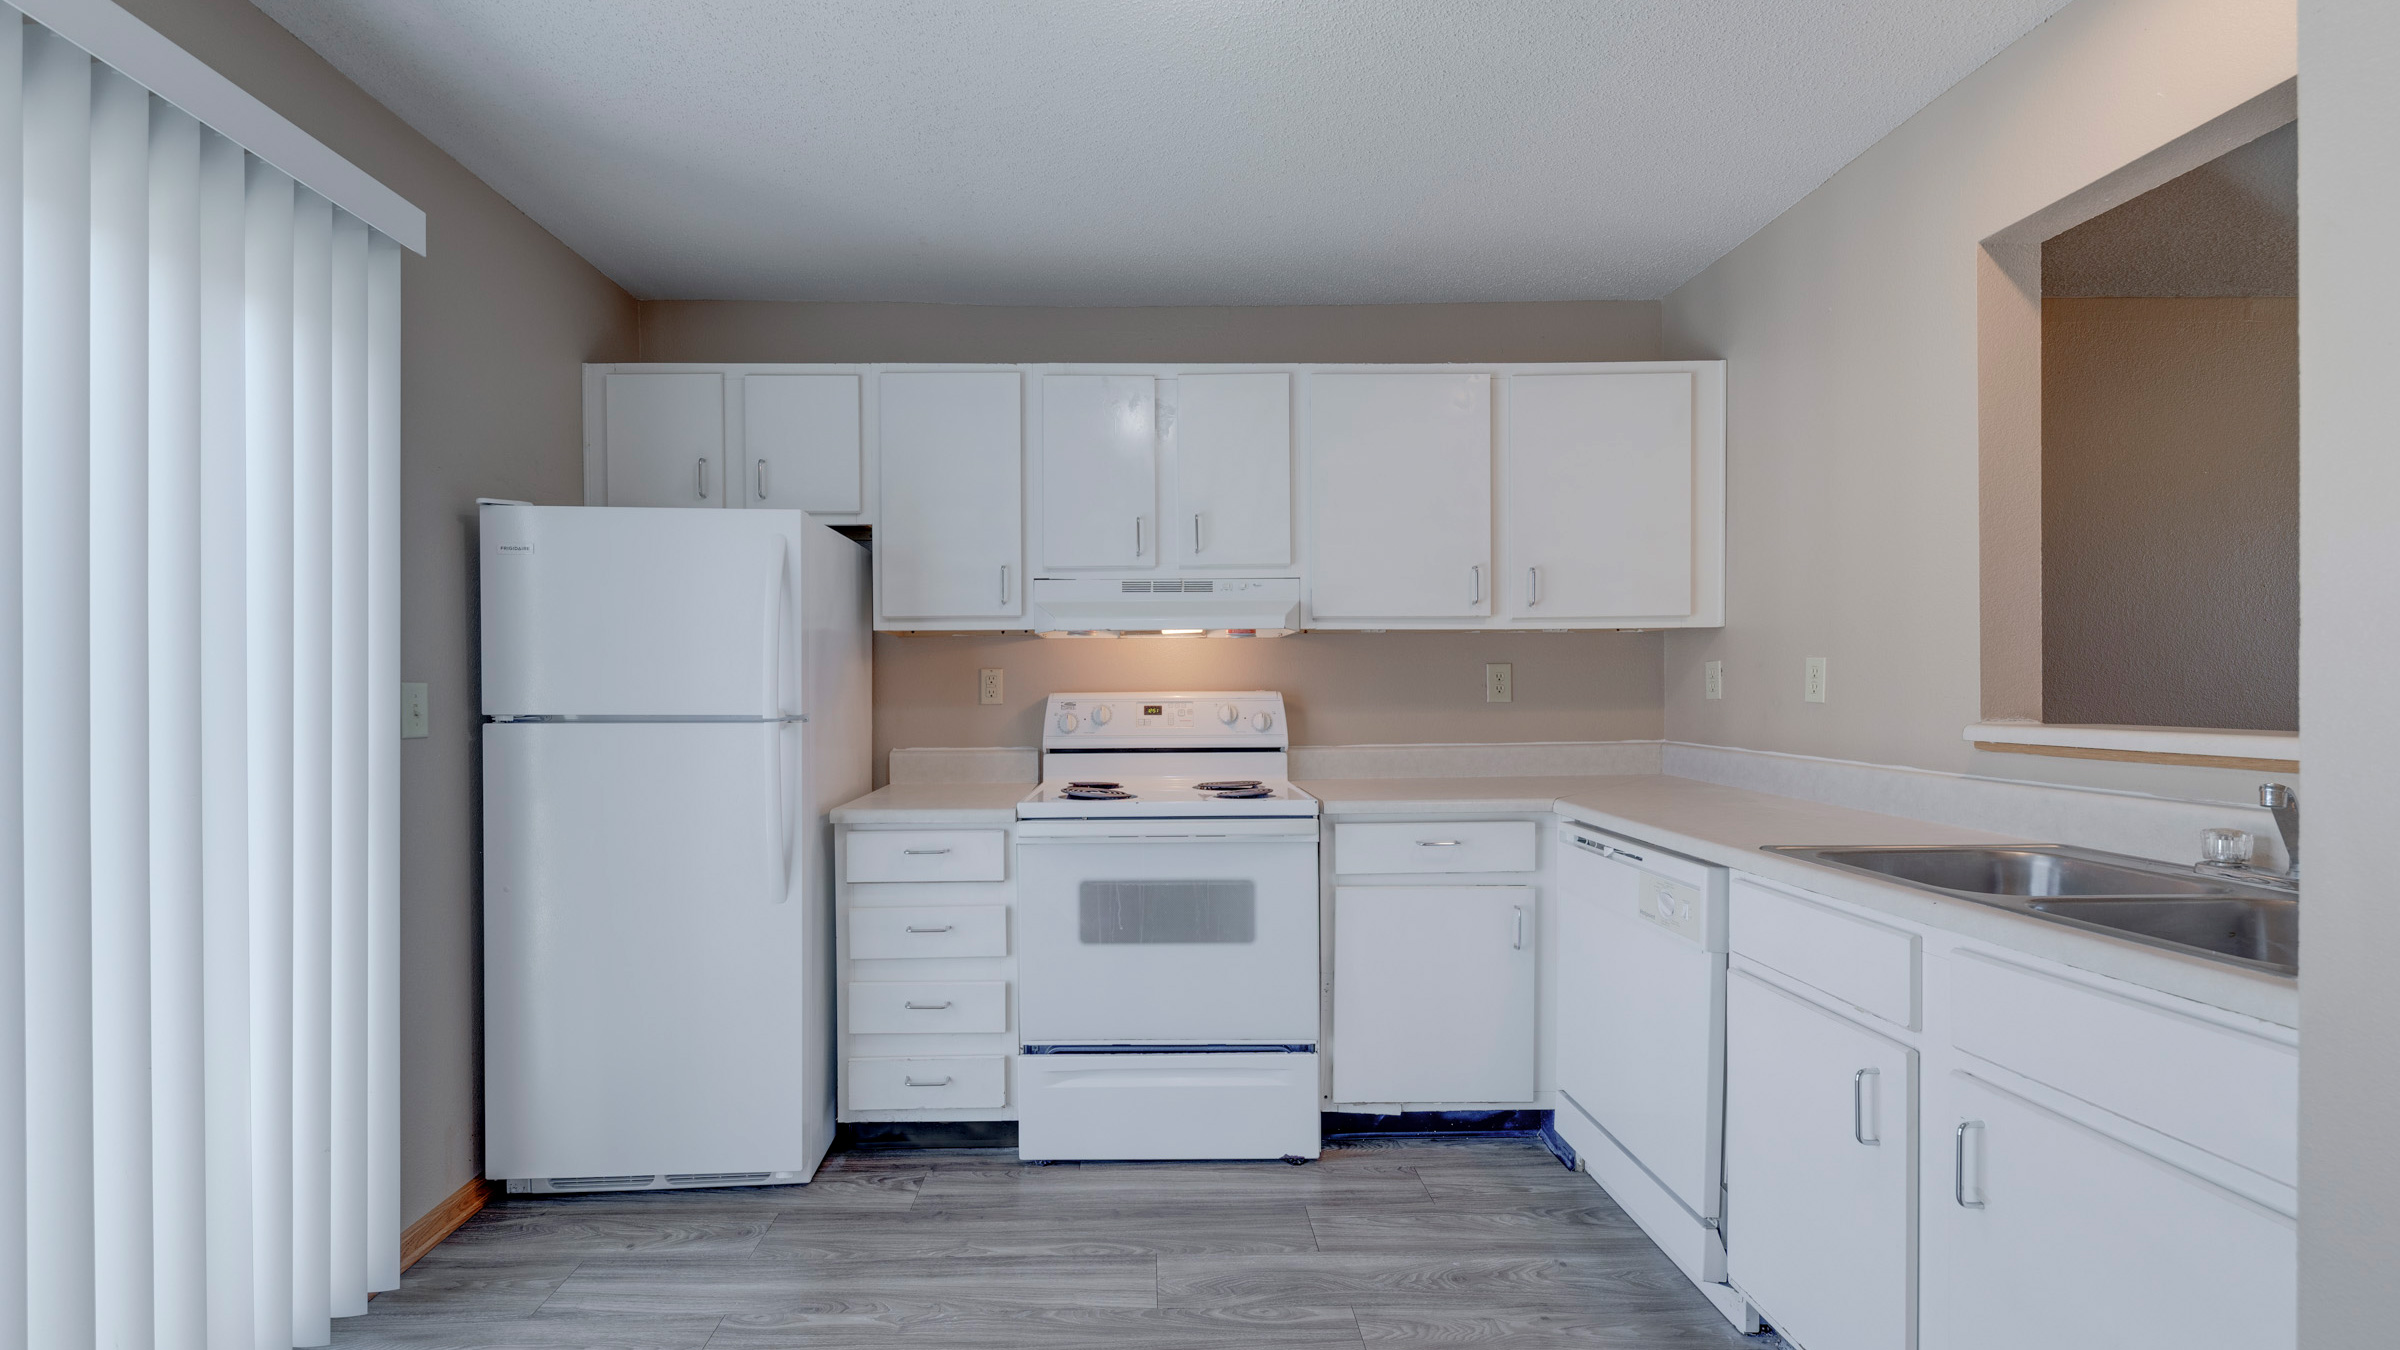 3 bedroom apartment, kitchen - slideshow image